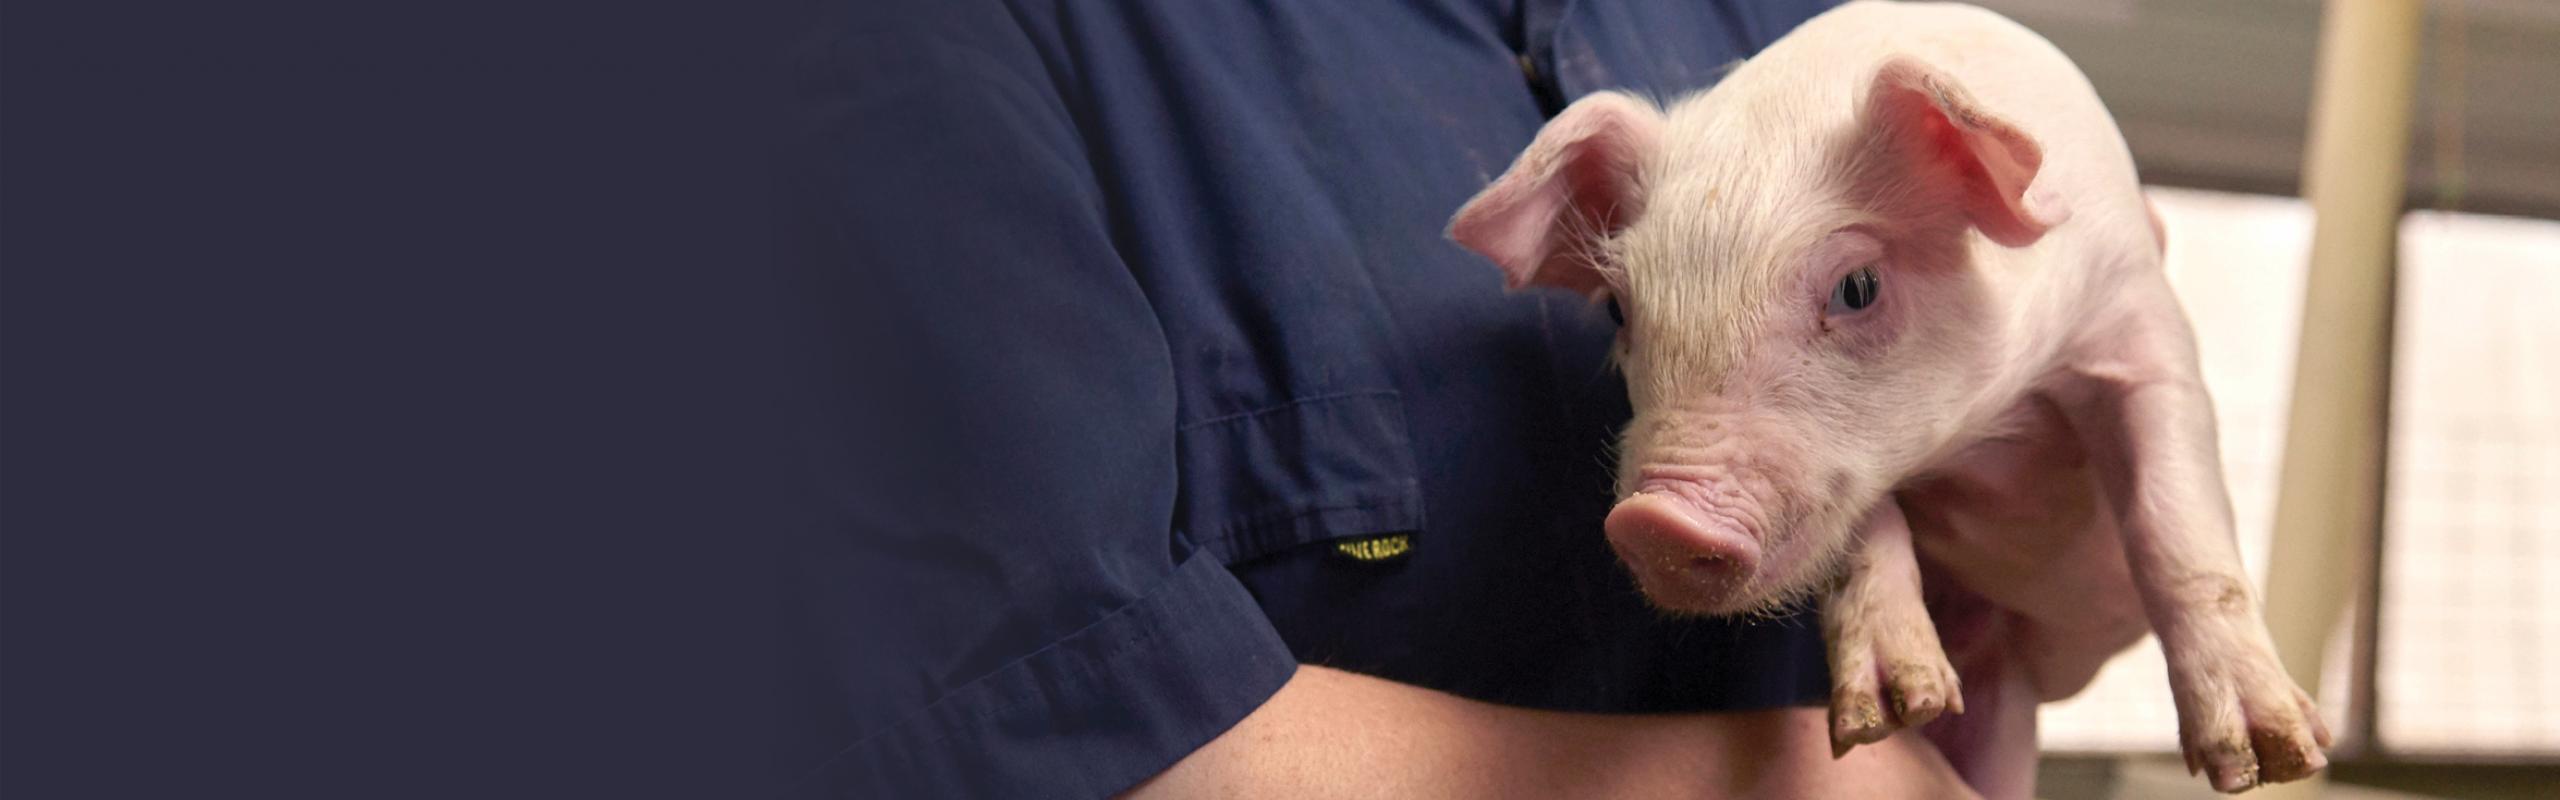 Farmer holding baby pig